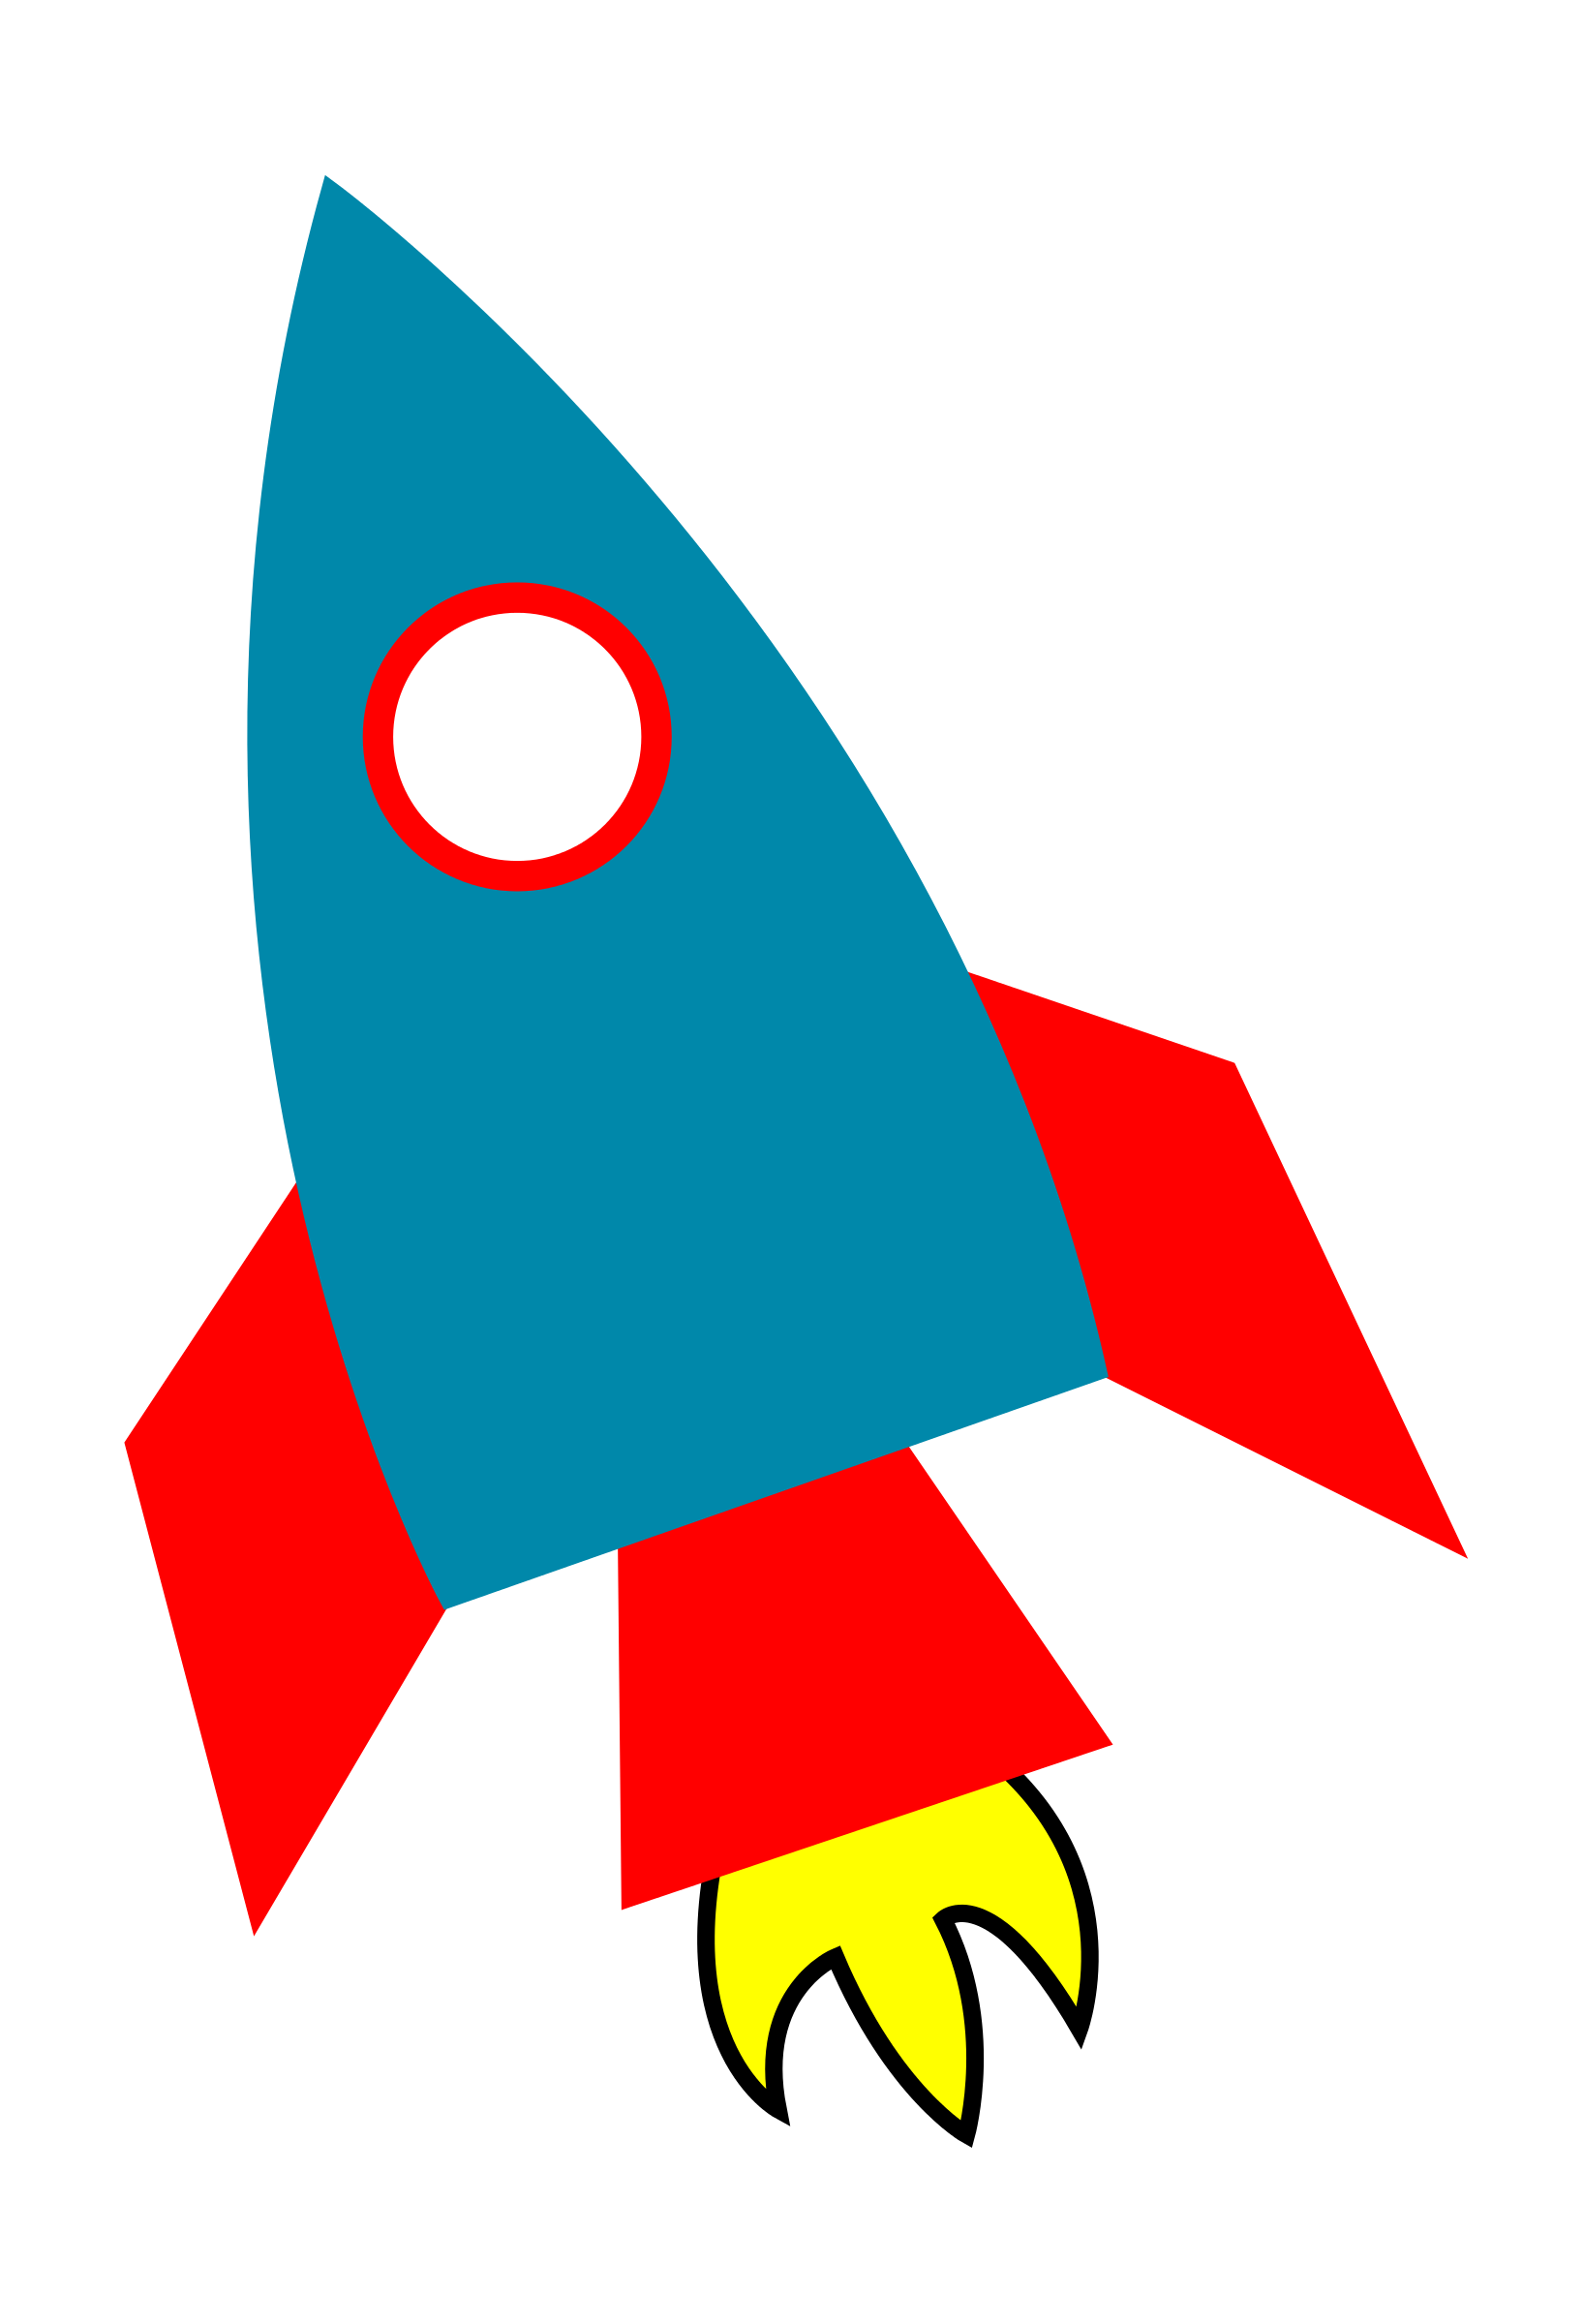 Space rocket clipart.